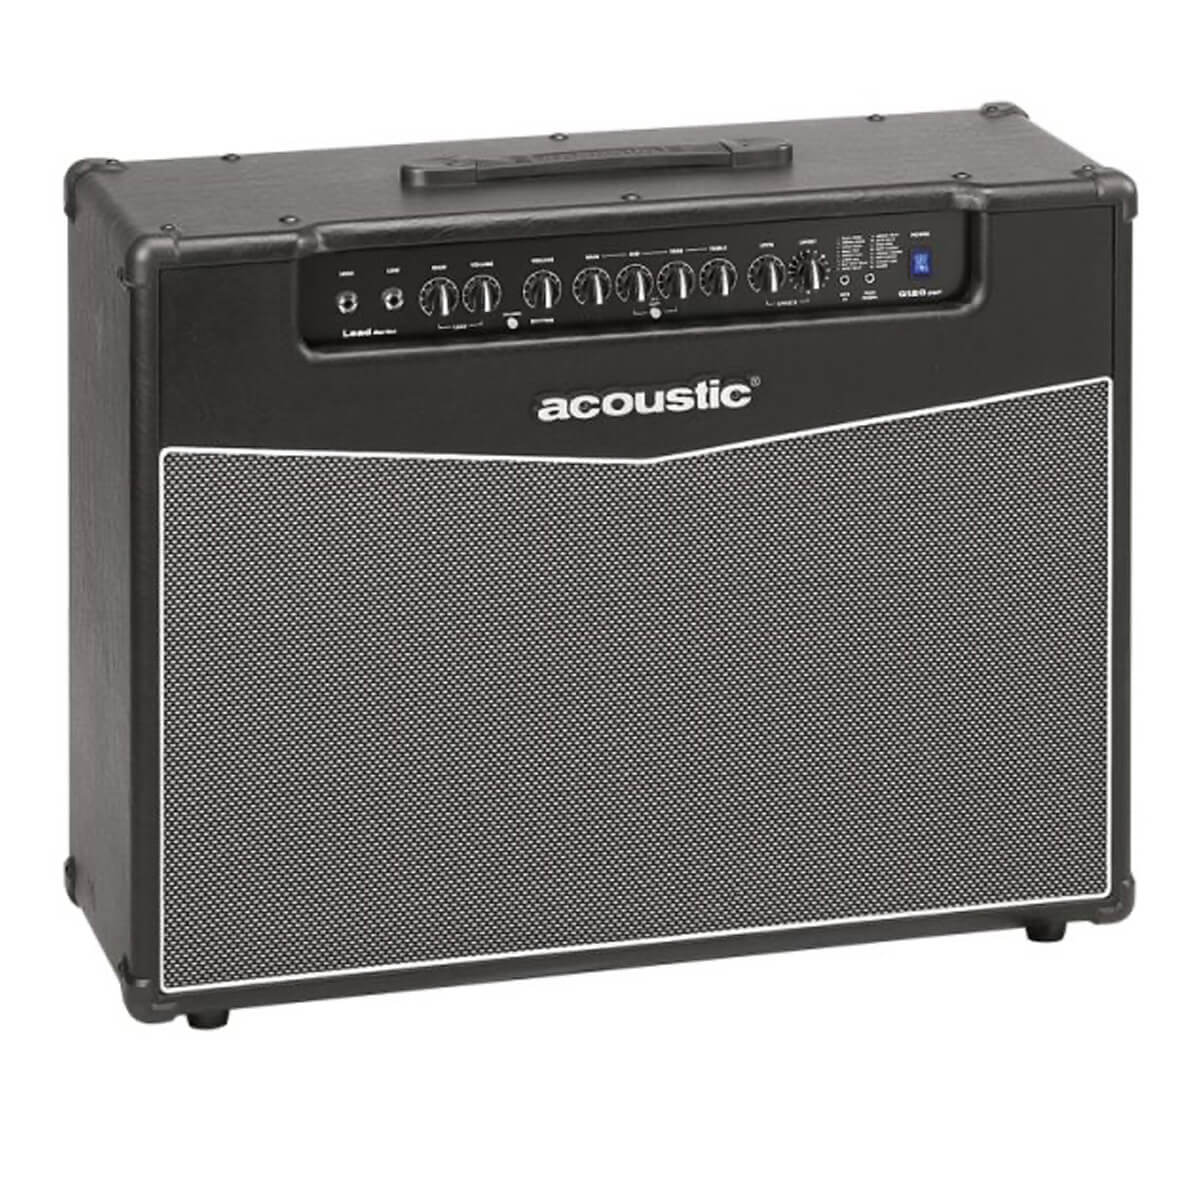 Акустическая соло. Acoustic g20 amp. Электрогитара DSP. Acoustic Guitar Amplifier. B G акустика.